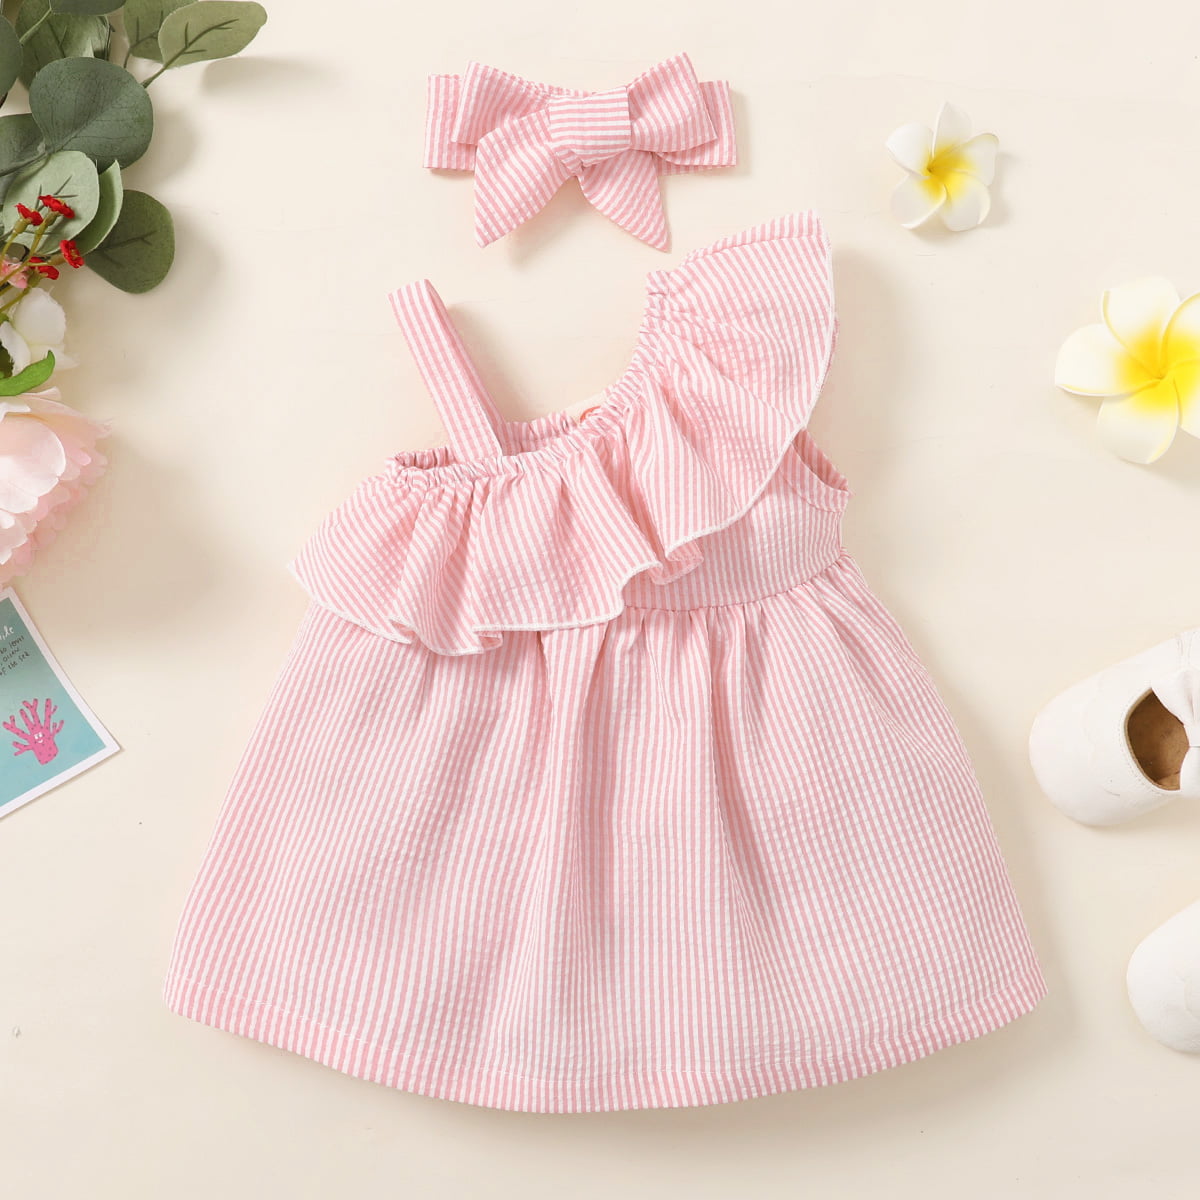 Buy Newborn cotton sleeveless dress online, Little Sudhams